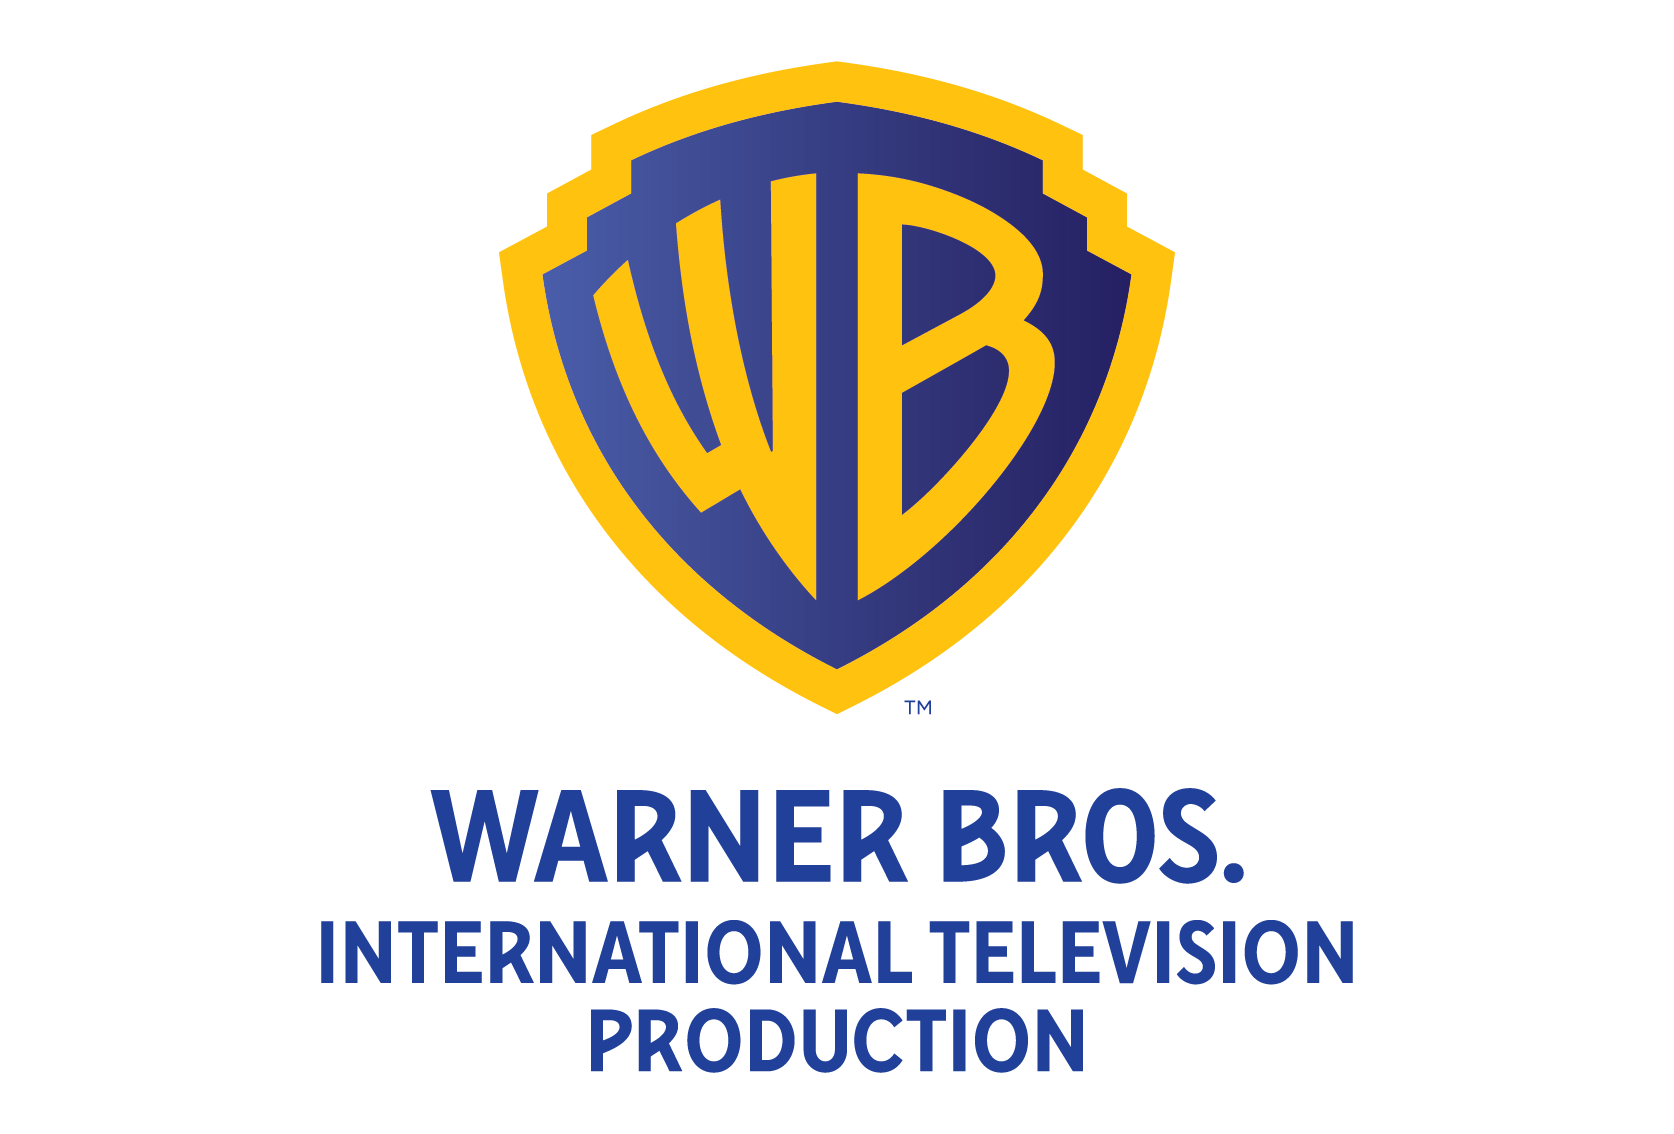 Warner Bros International Television Production Audiovisual Identity